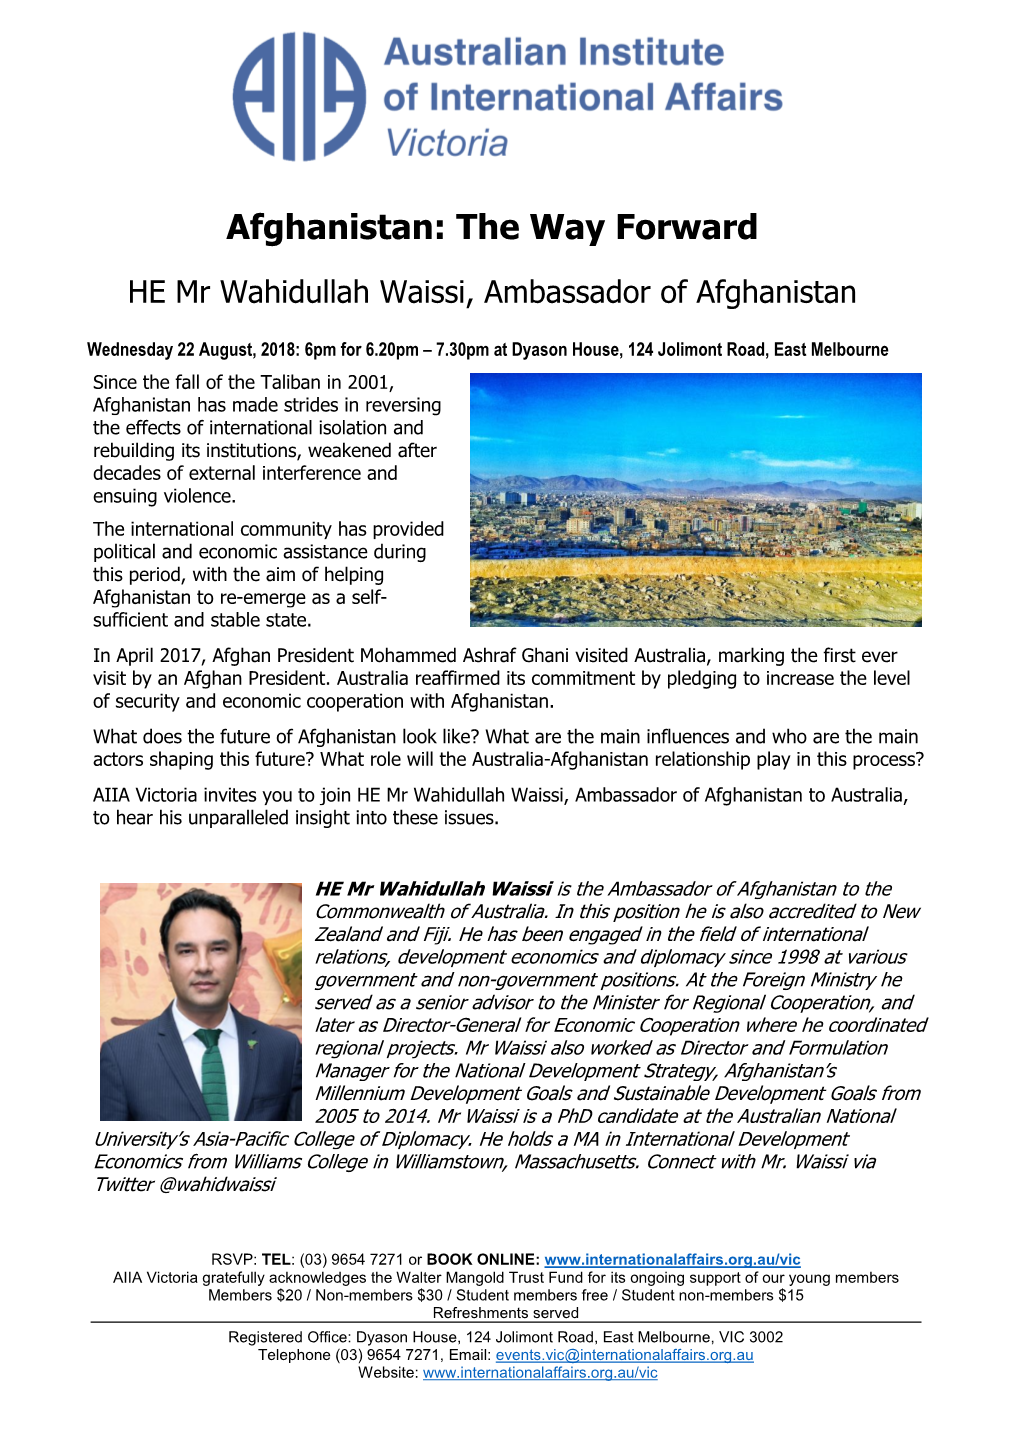 Afghanistan: the Way Forward